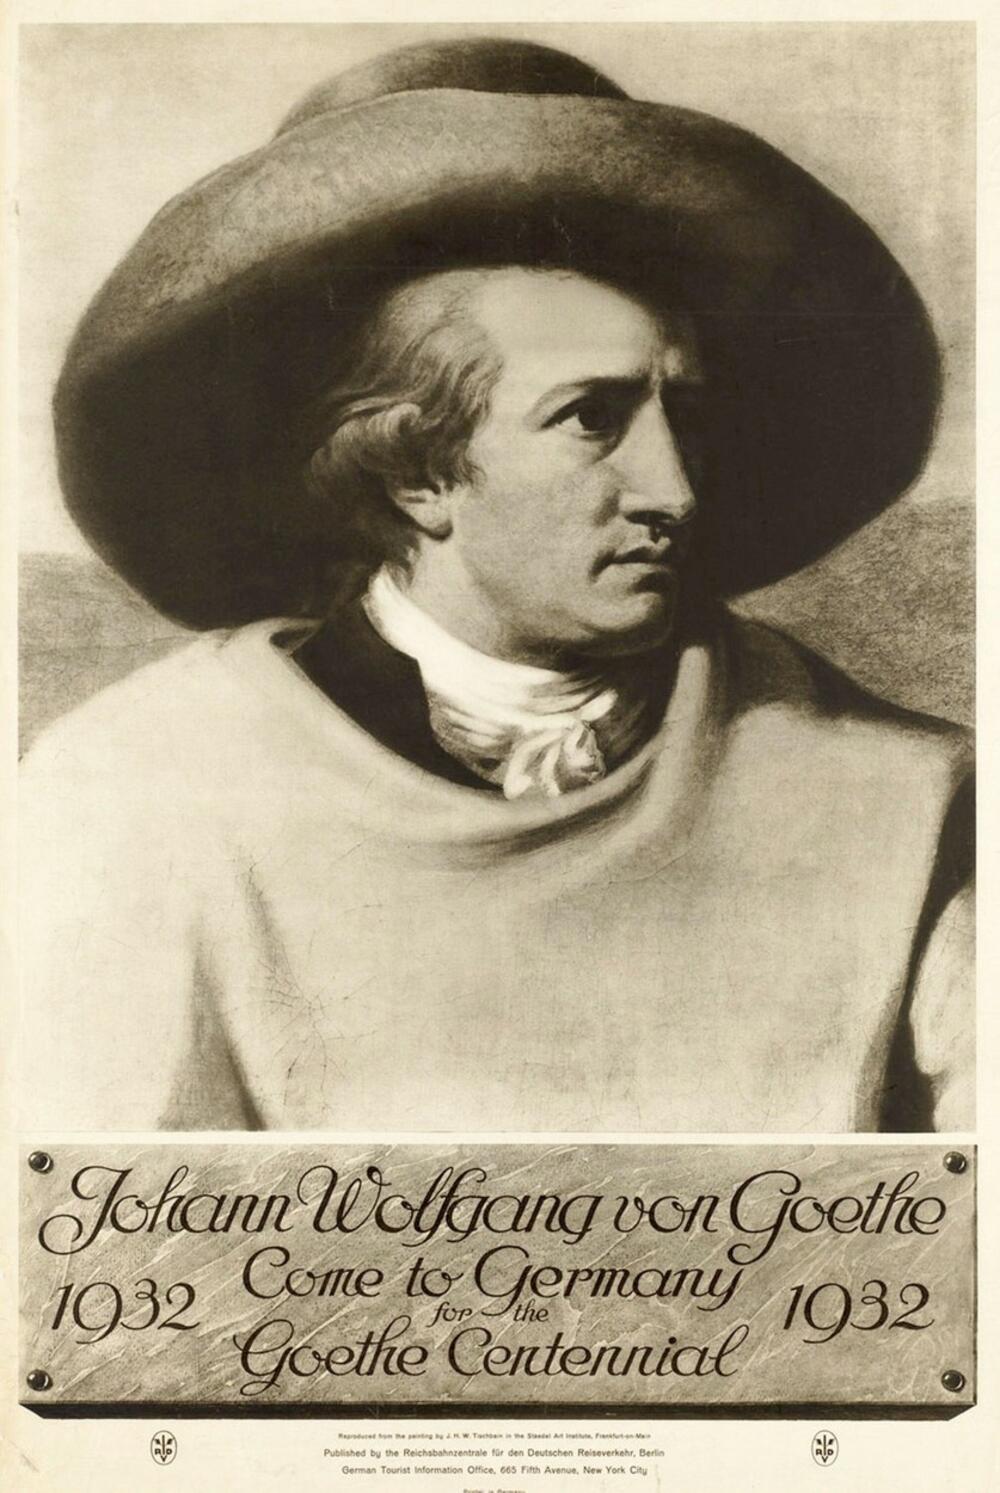 Johan Volfgang Gete